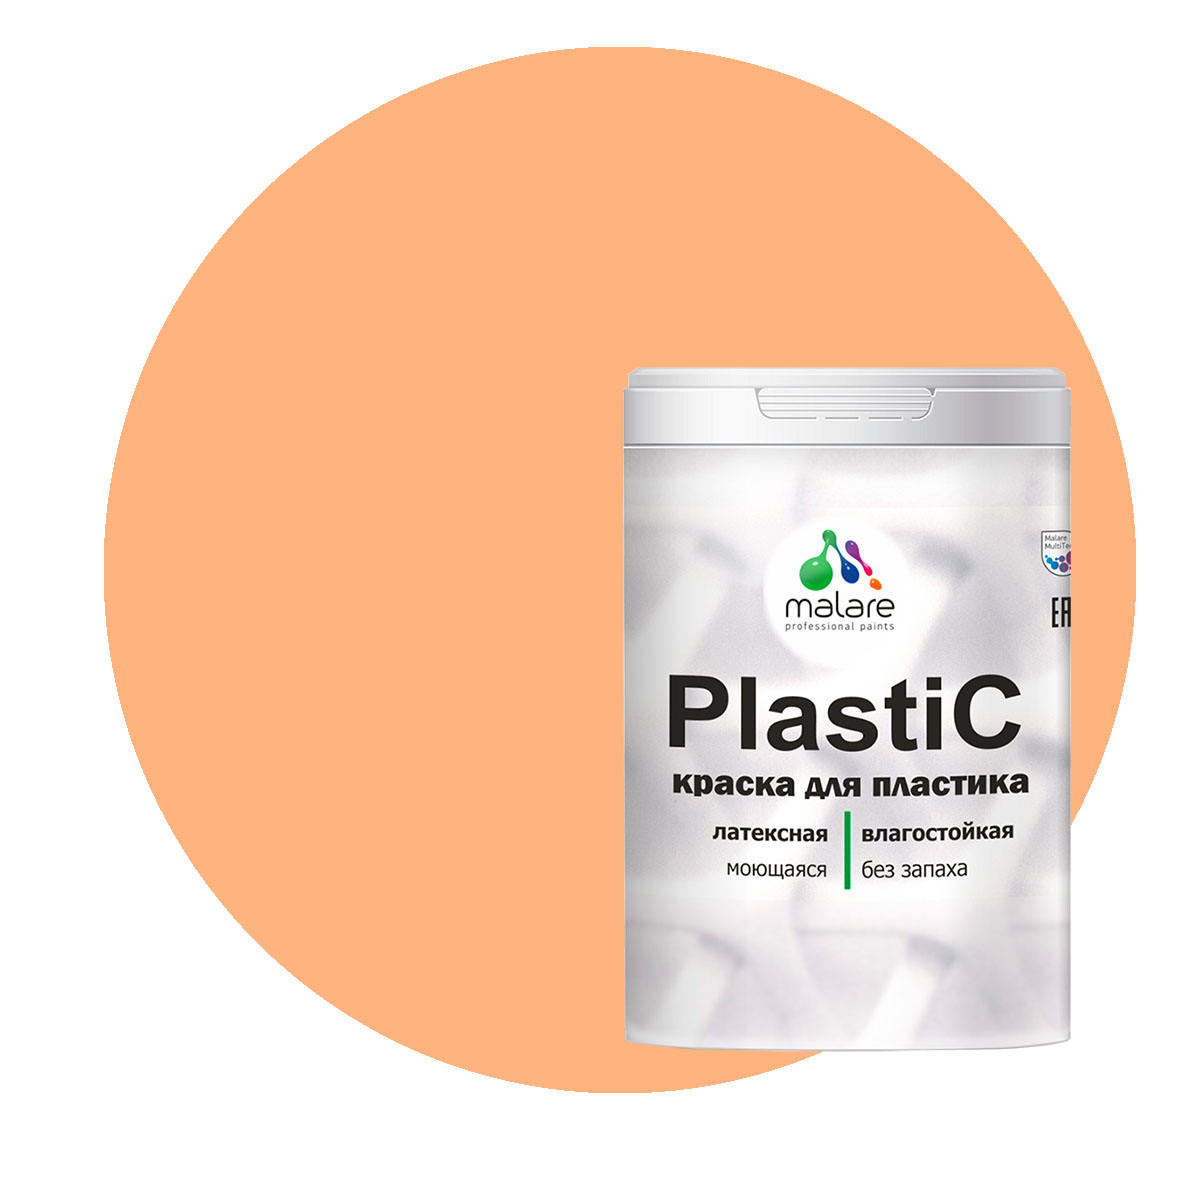 Краска Malare PlastiC для пластика, ПВХ, для сайдинга, свежая охра, 2 кг.